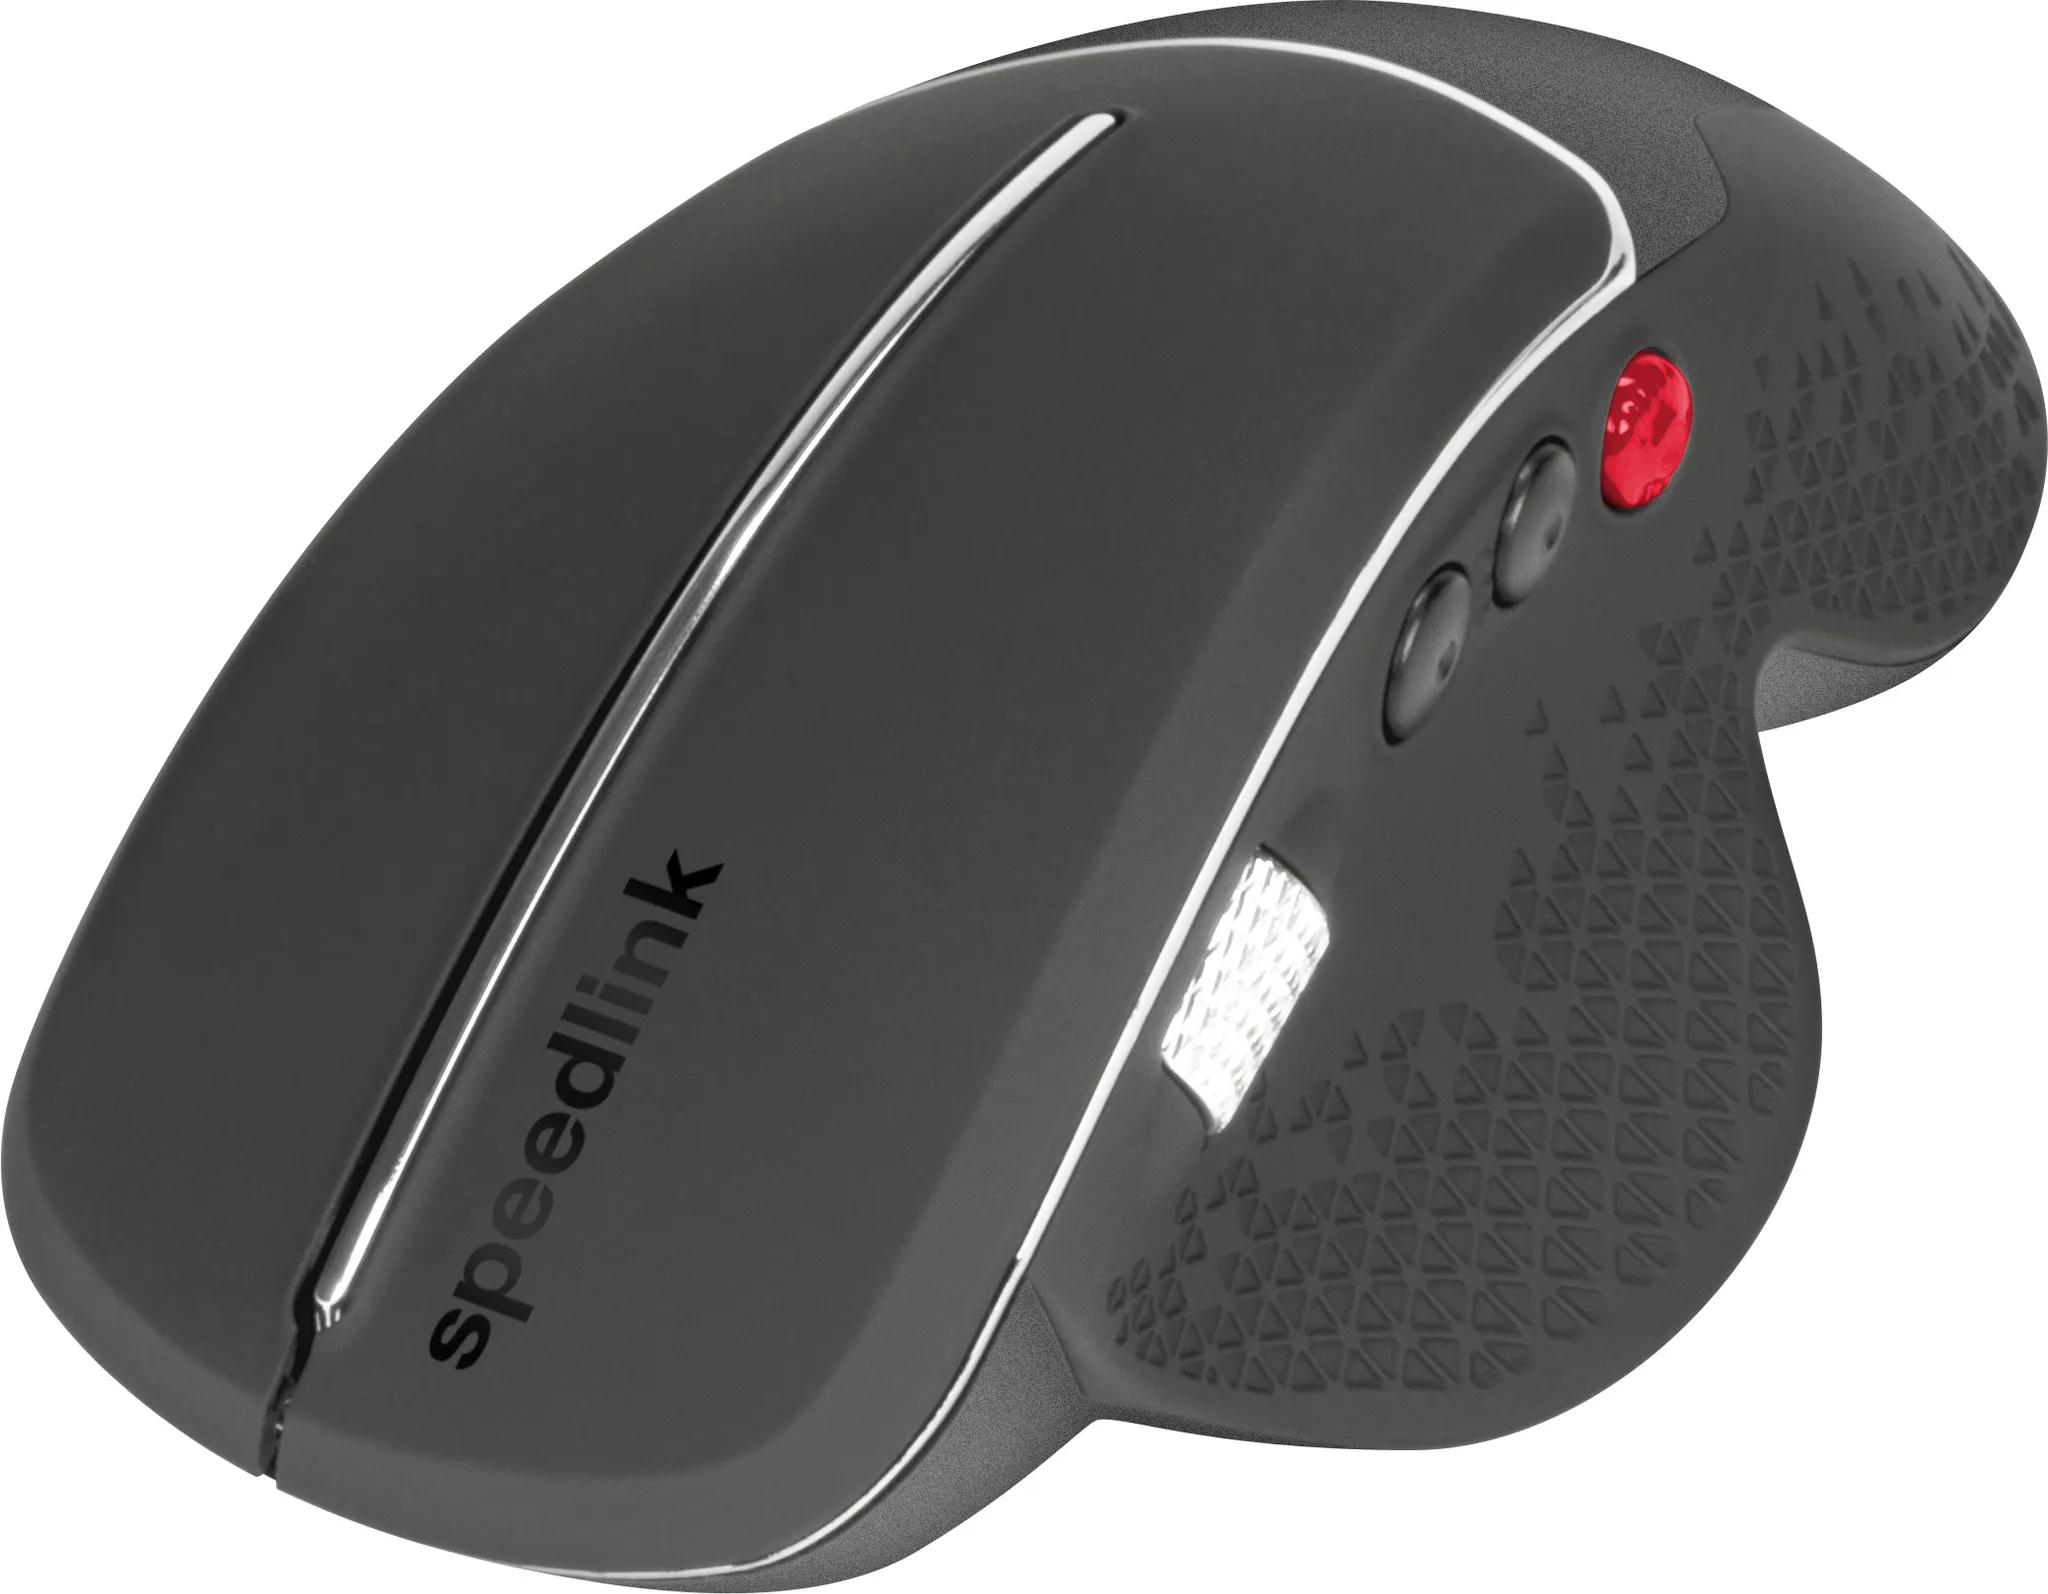 Ergonomic - LITIKO Mouse SPEEDLINK wireless,